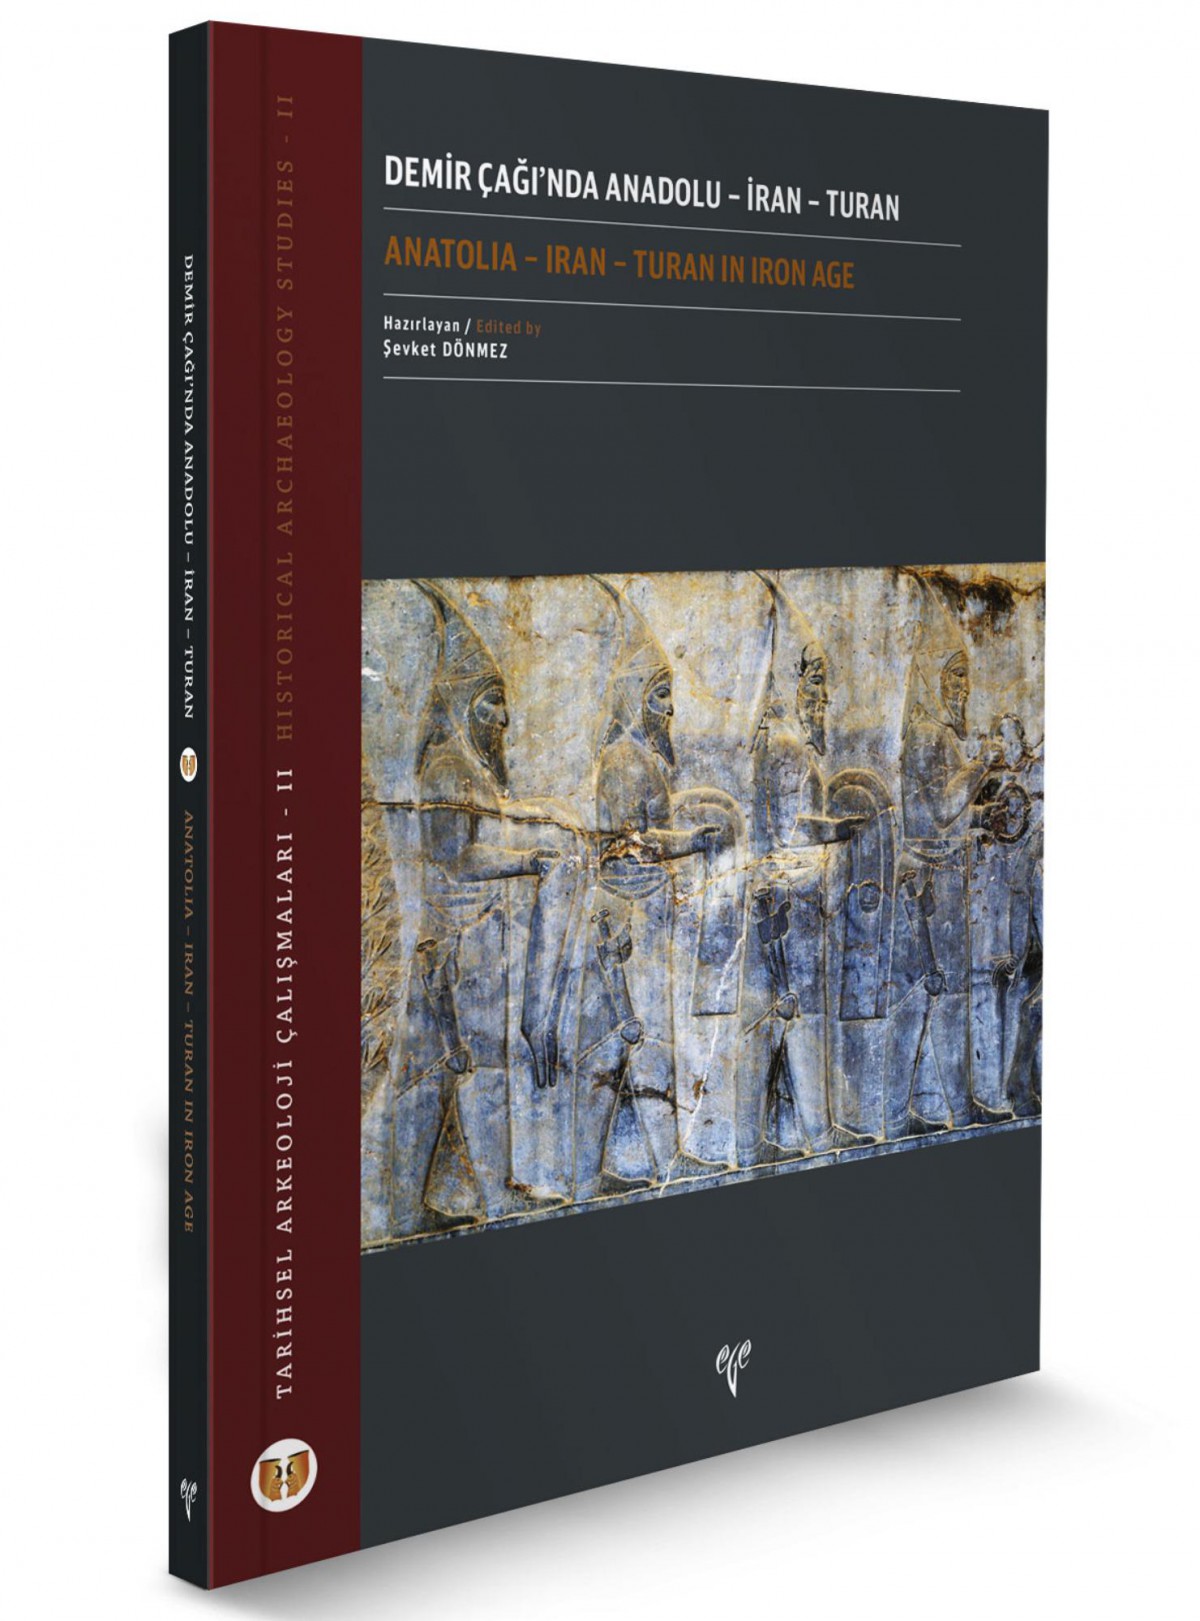 Anatolia - Iran - Turan in Iron Age - Historical Archaeology Studies II